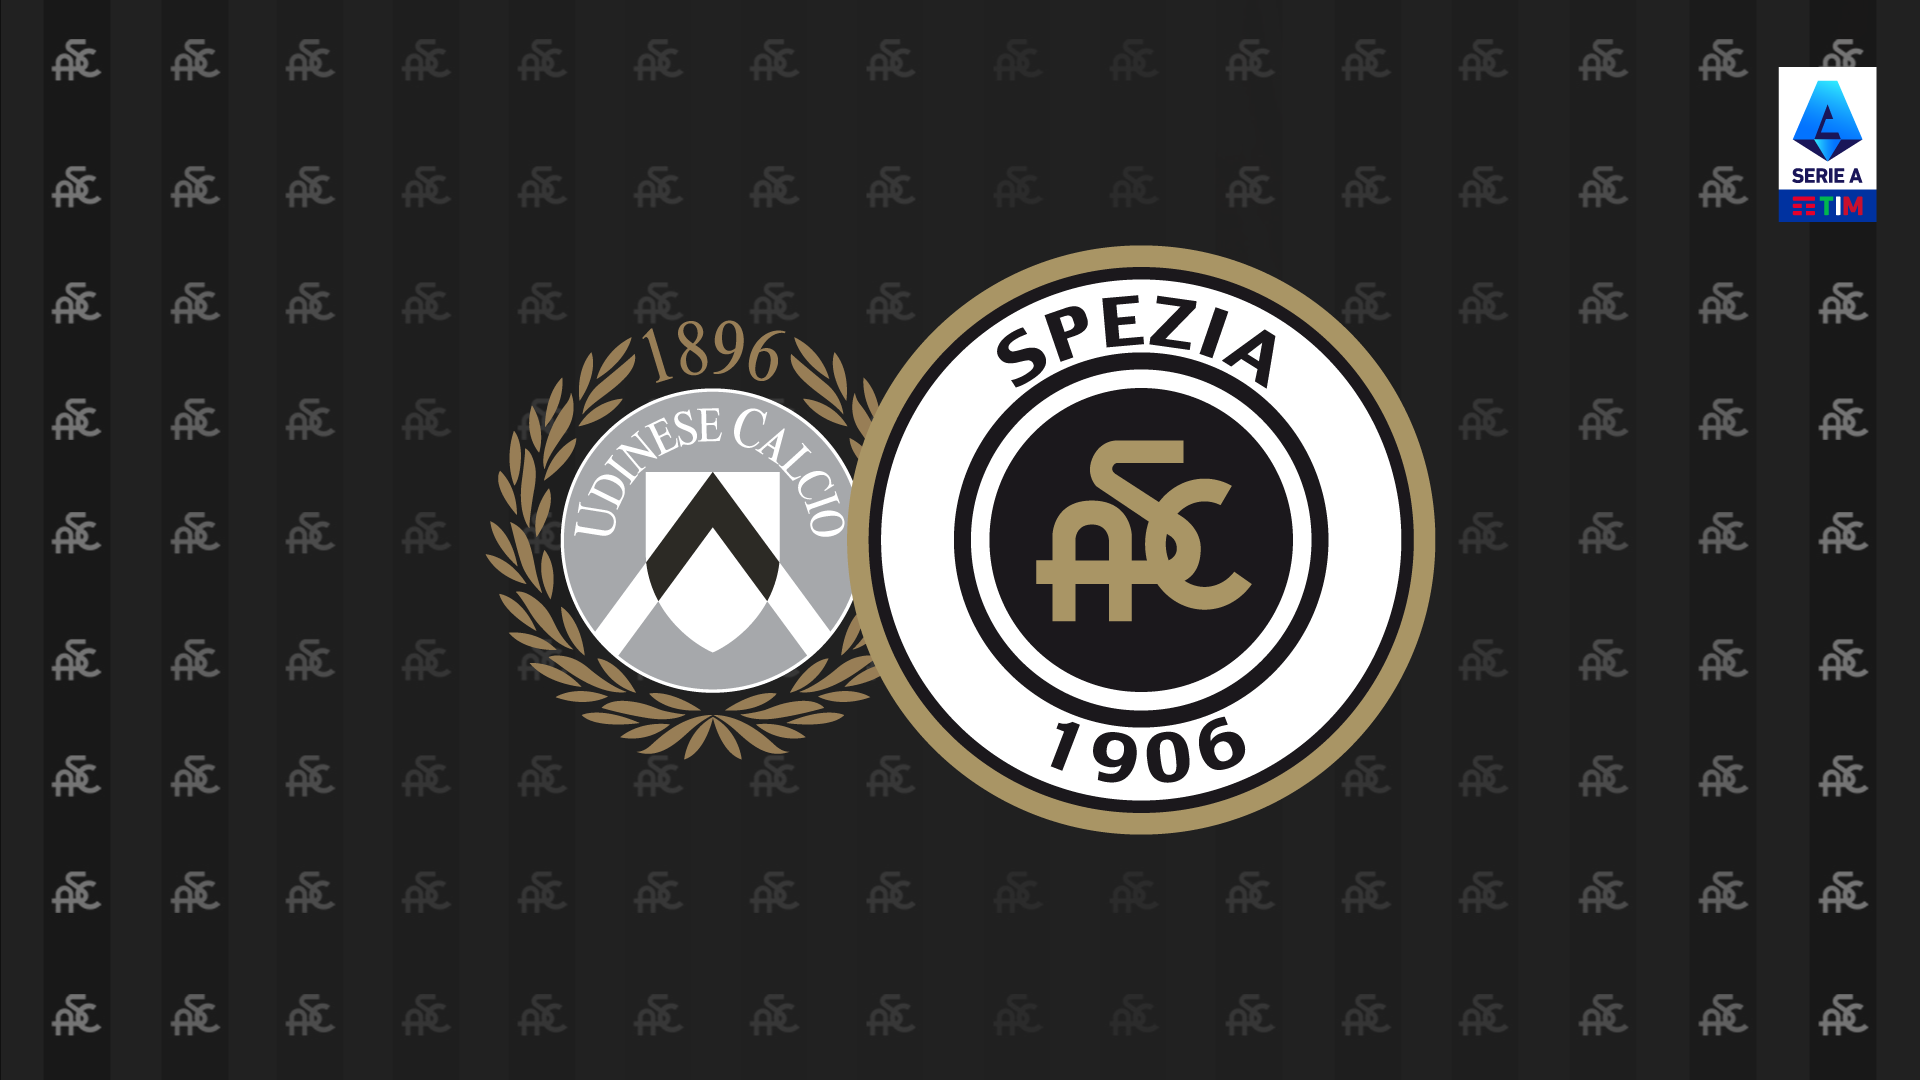 Udinese-Spezia: presale available on TicketOne